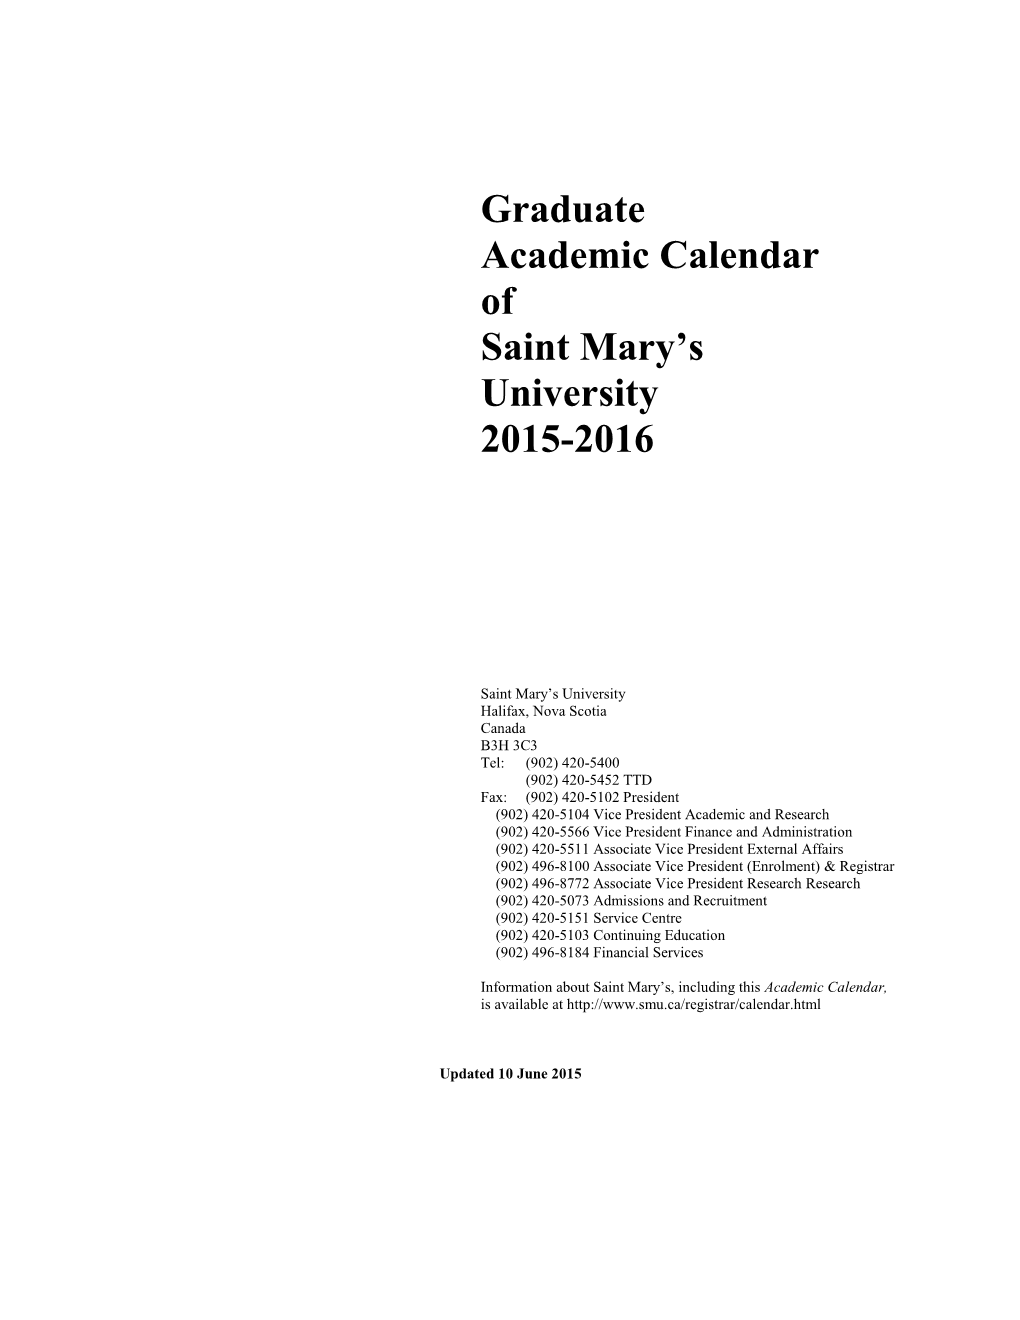 Graduate Academic Calendar of Saint Mary's University 2015-2016